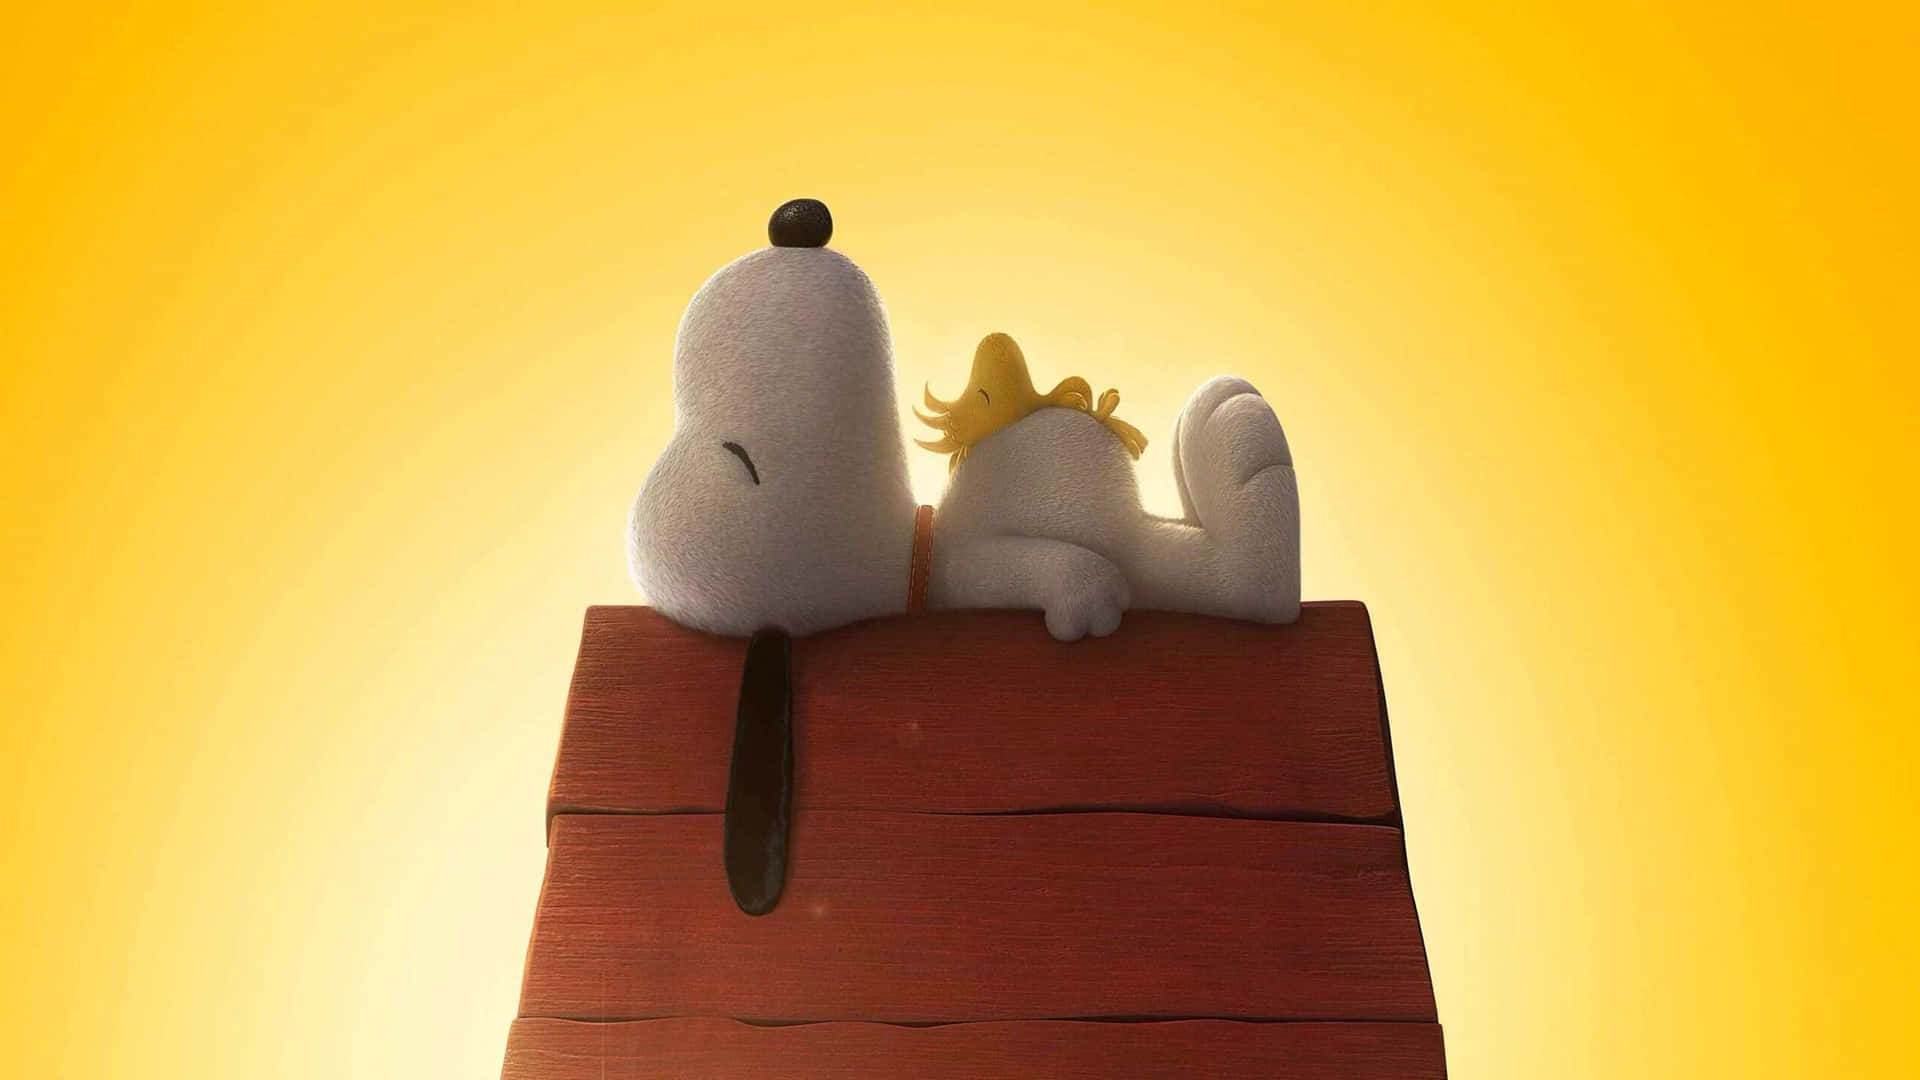 "Snoopy Enjoys the Breeze on a Sunny Day".